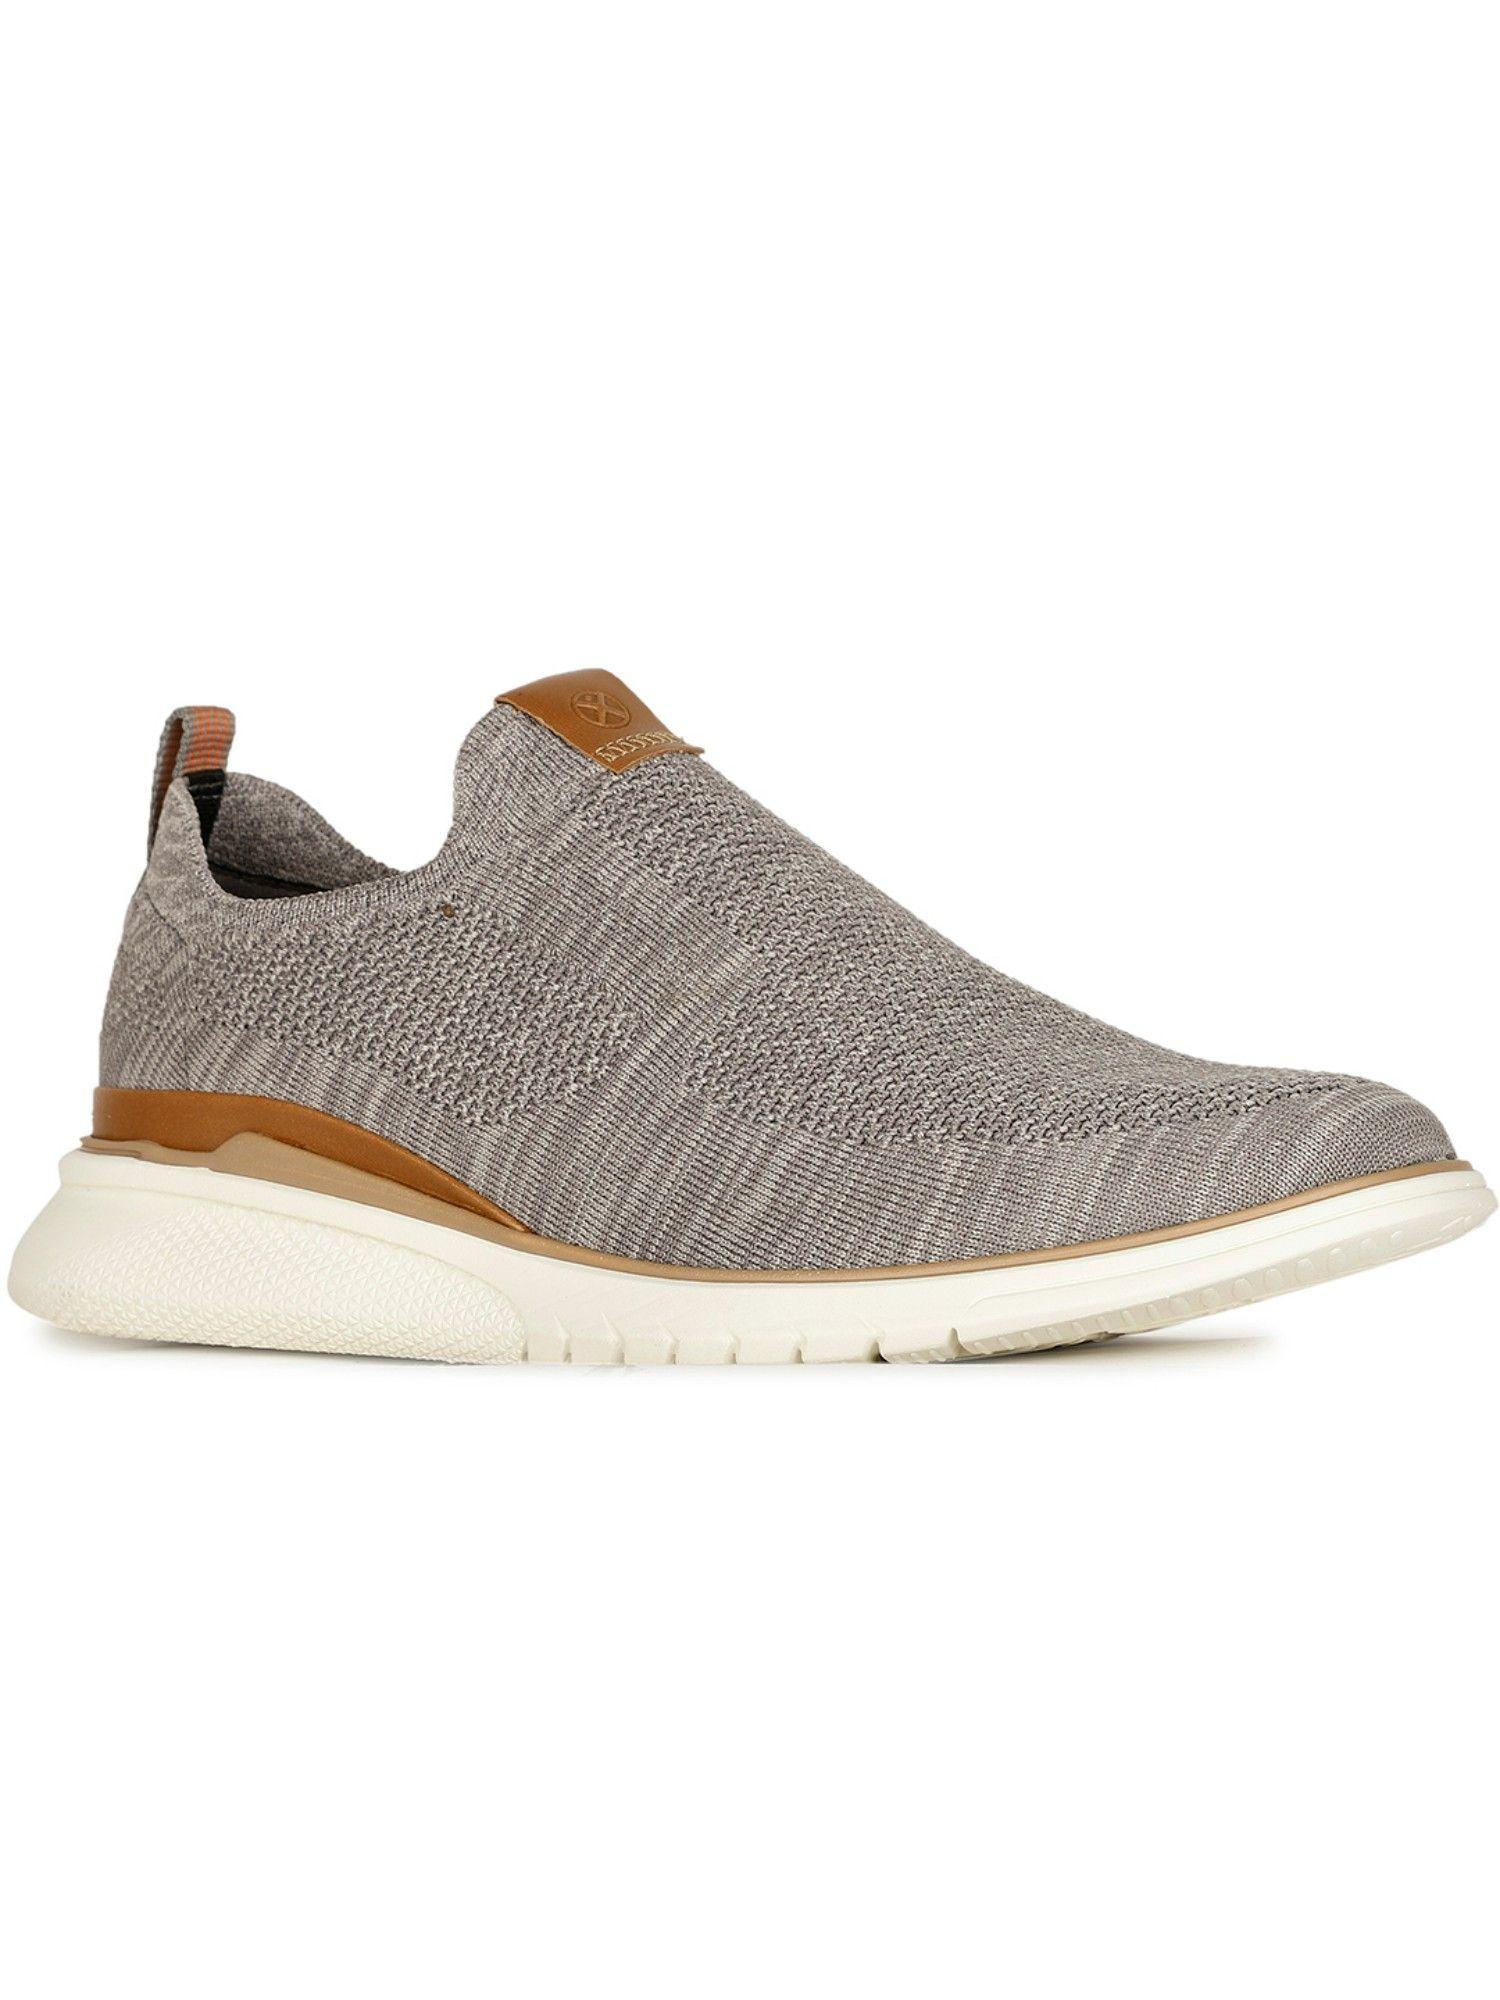 advance-knit-sneakers-for-men-(grey)